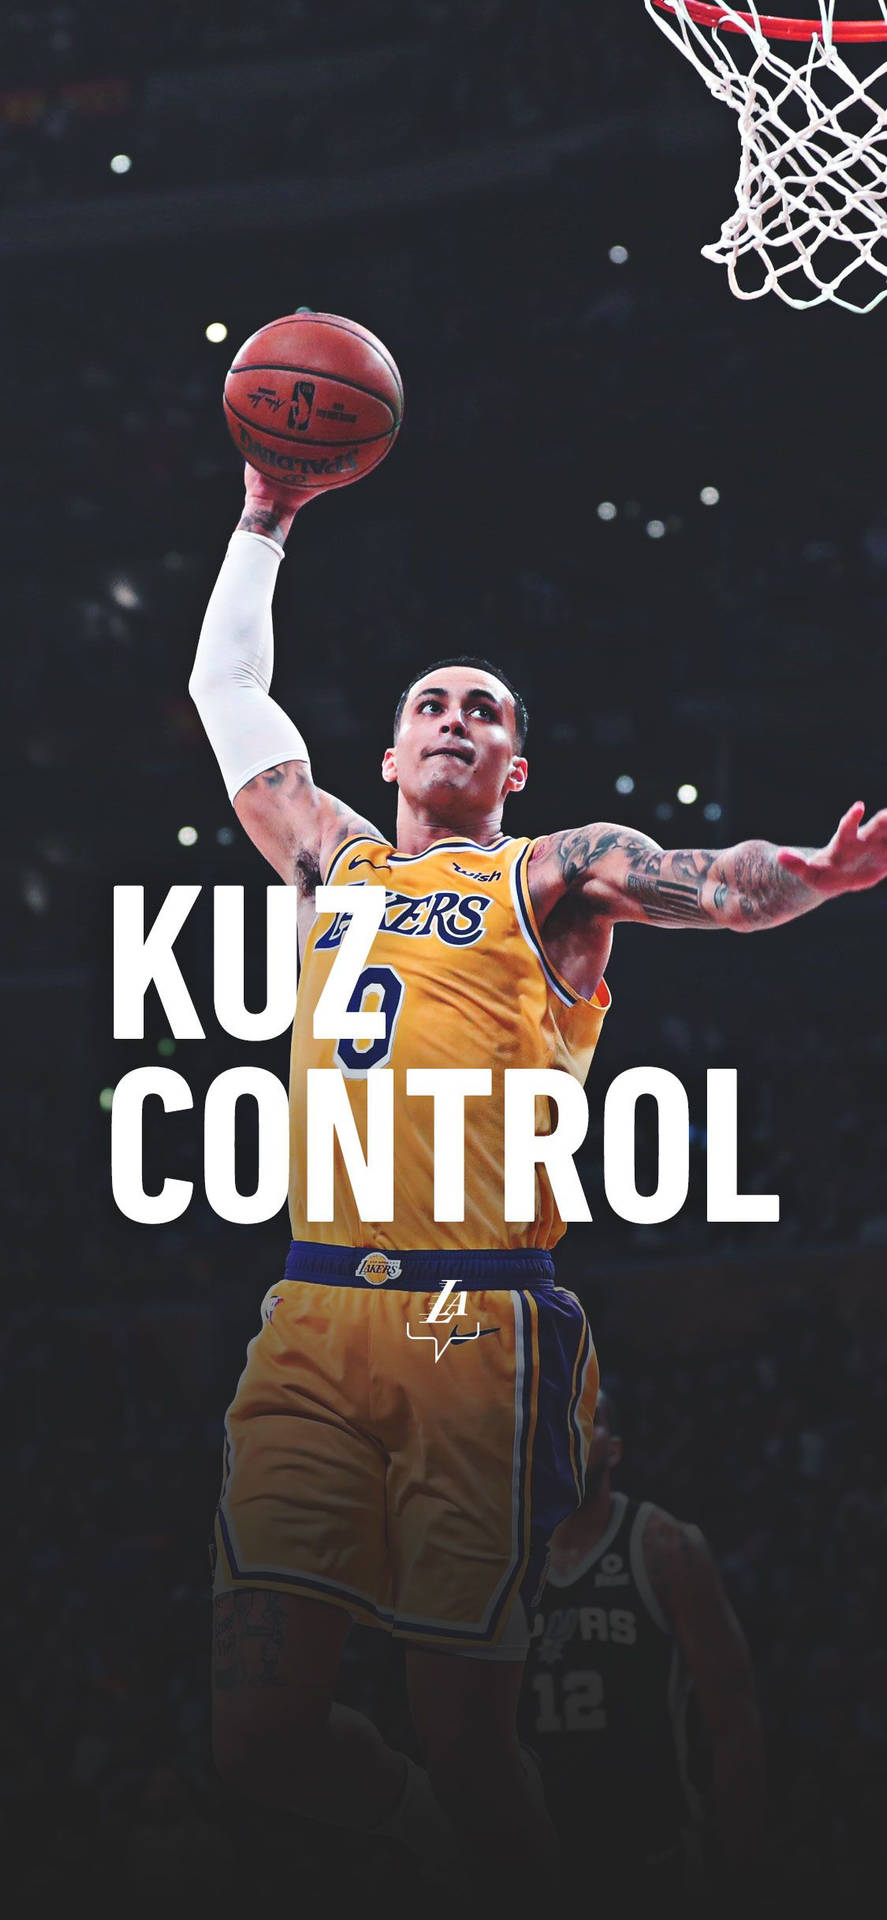 Cool Nba Kuz Control